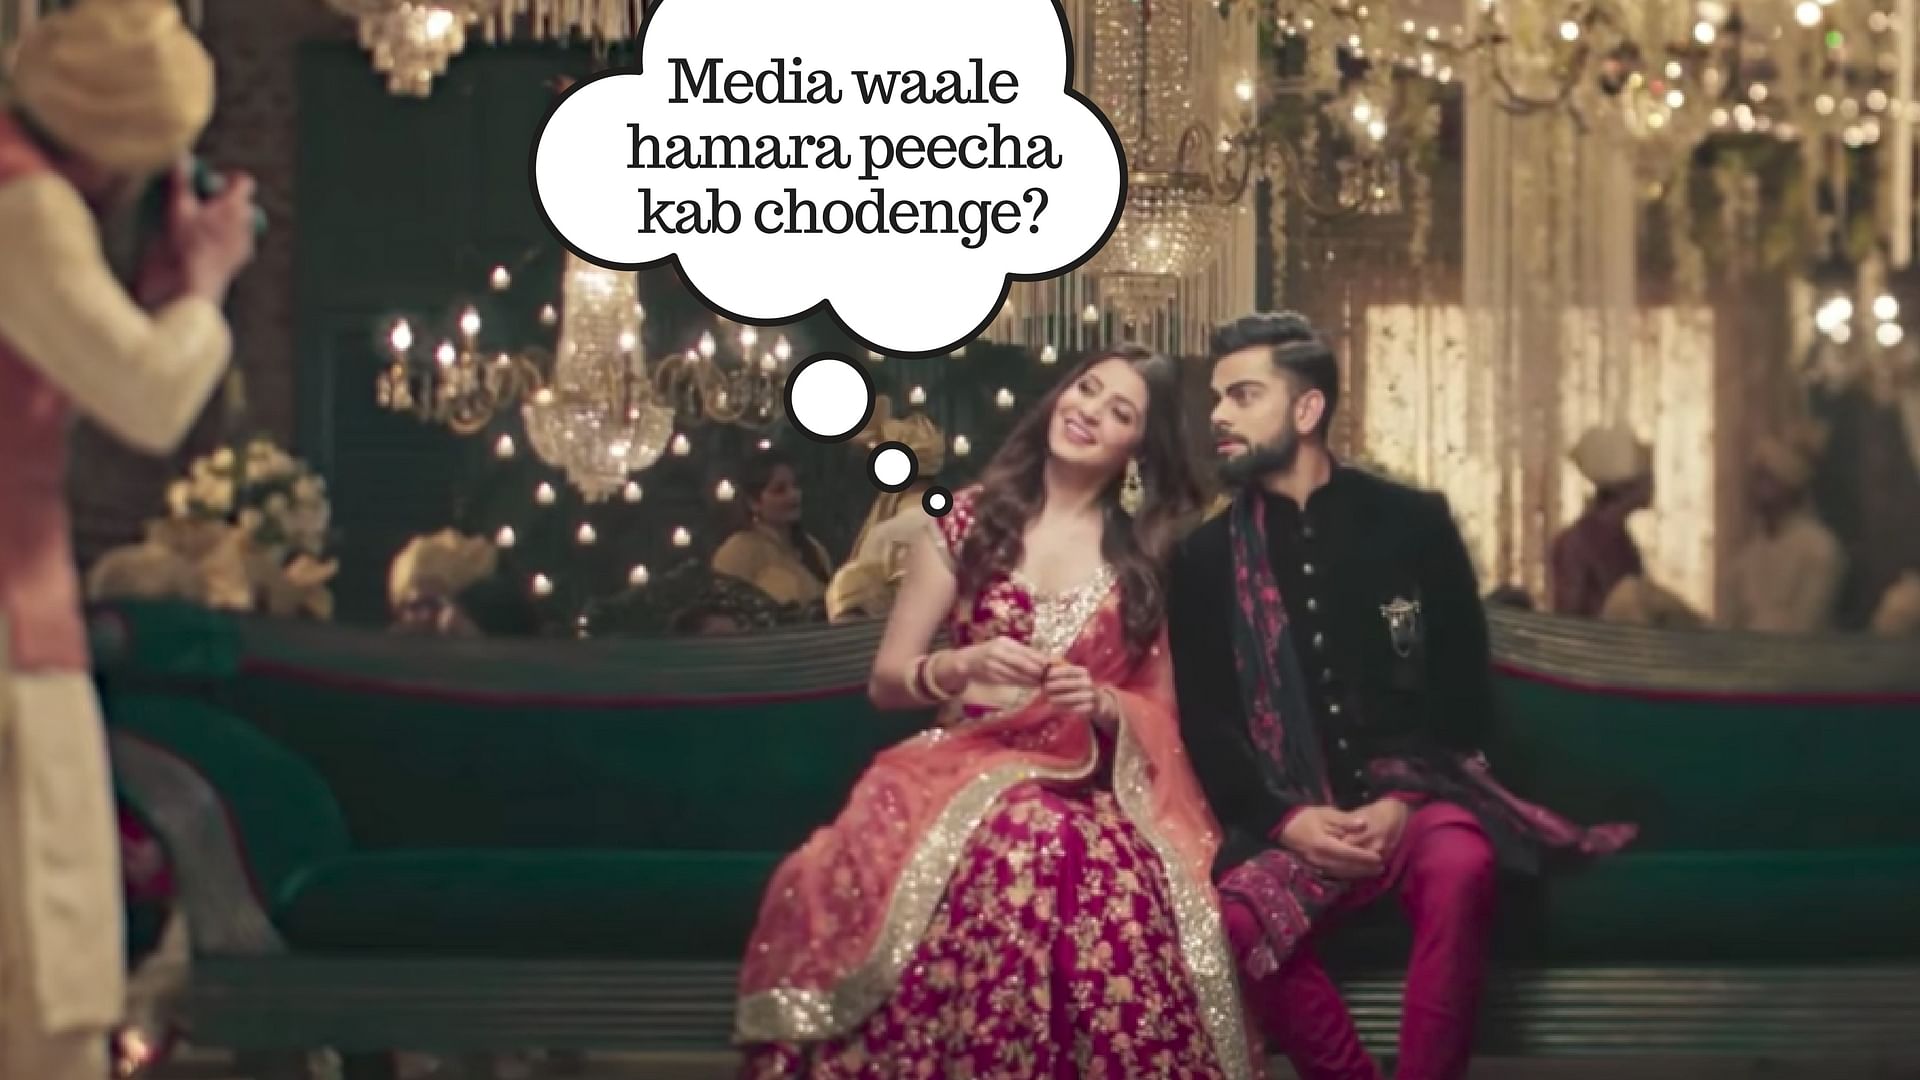 A still from the new ad featuring Anushka Sharma and Virat Kohli.